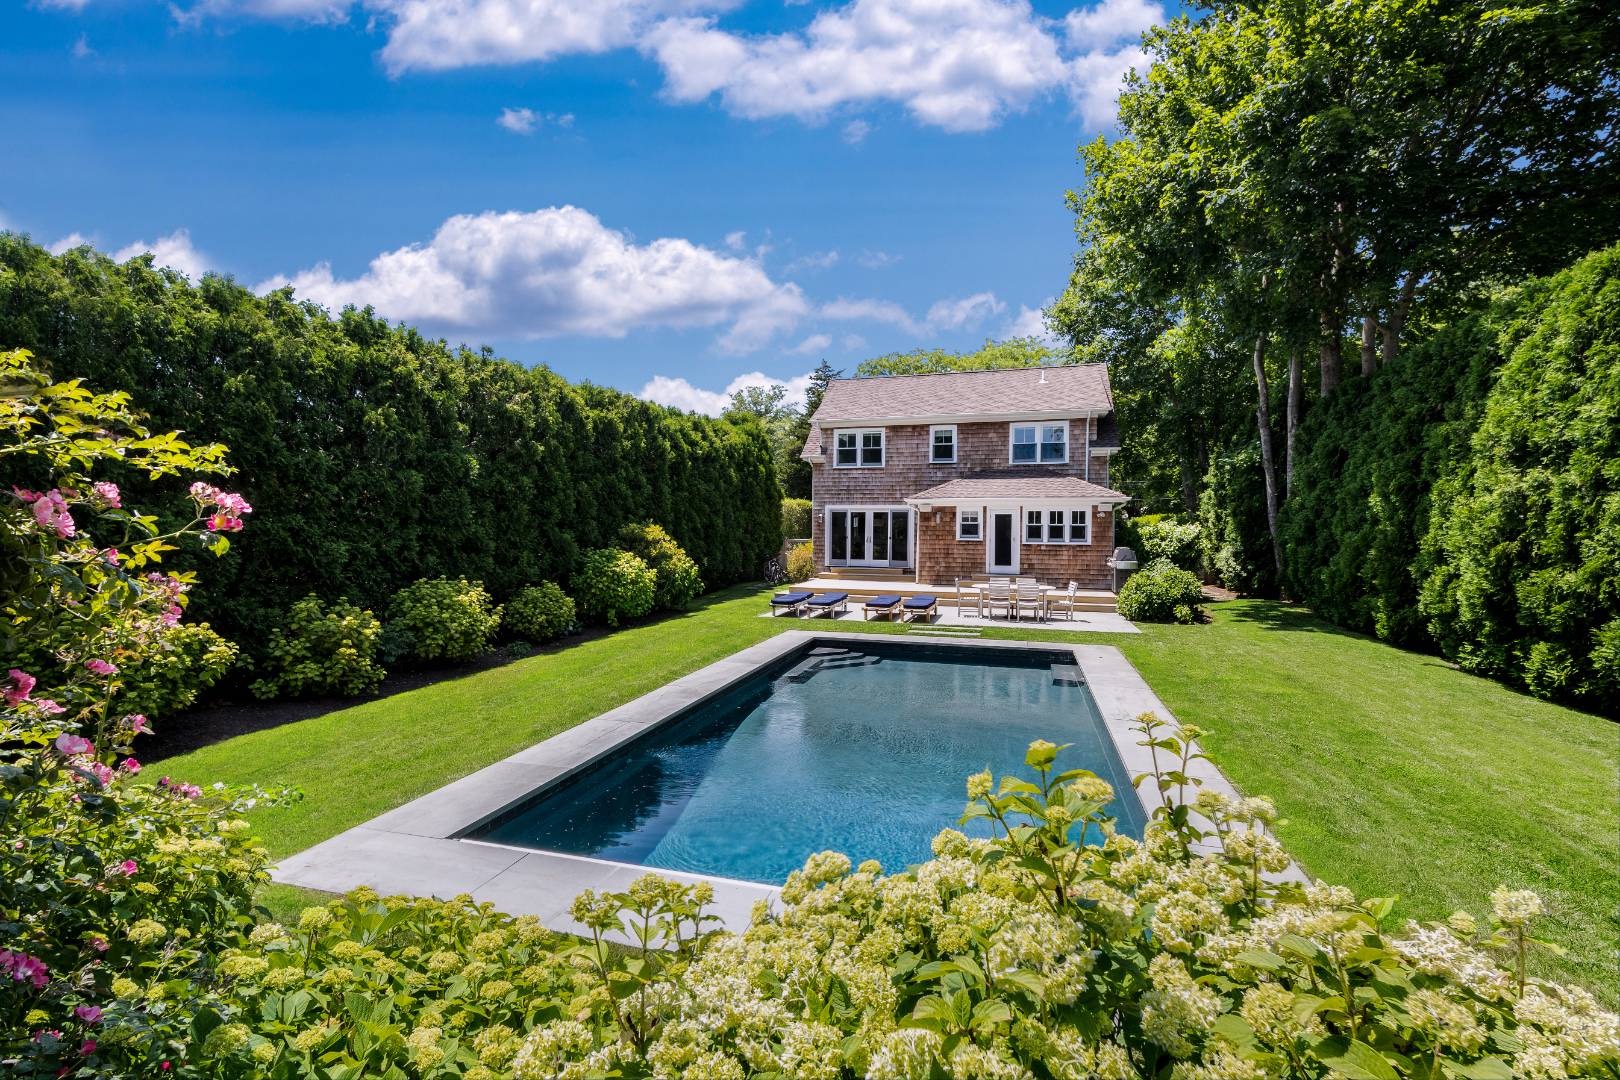 Rental Property at East Hampton, East Hampton, Hamptons, NY - Bedrooms: 4 
Bathrooms: 3  - $70,000 MO.